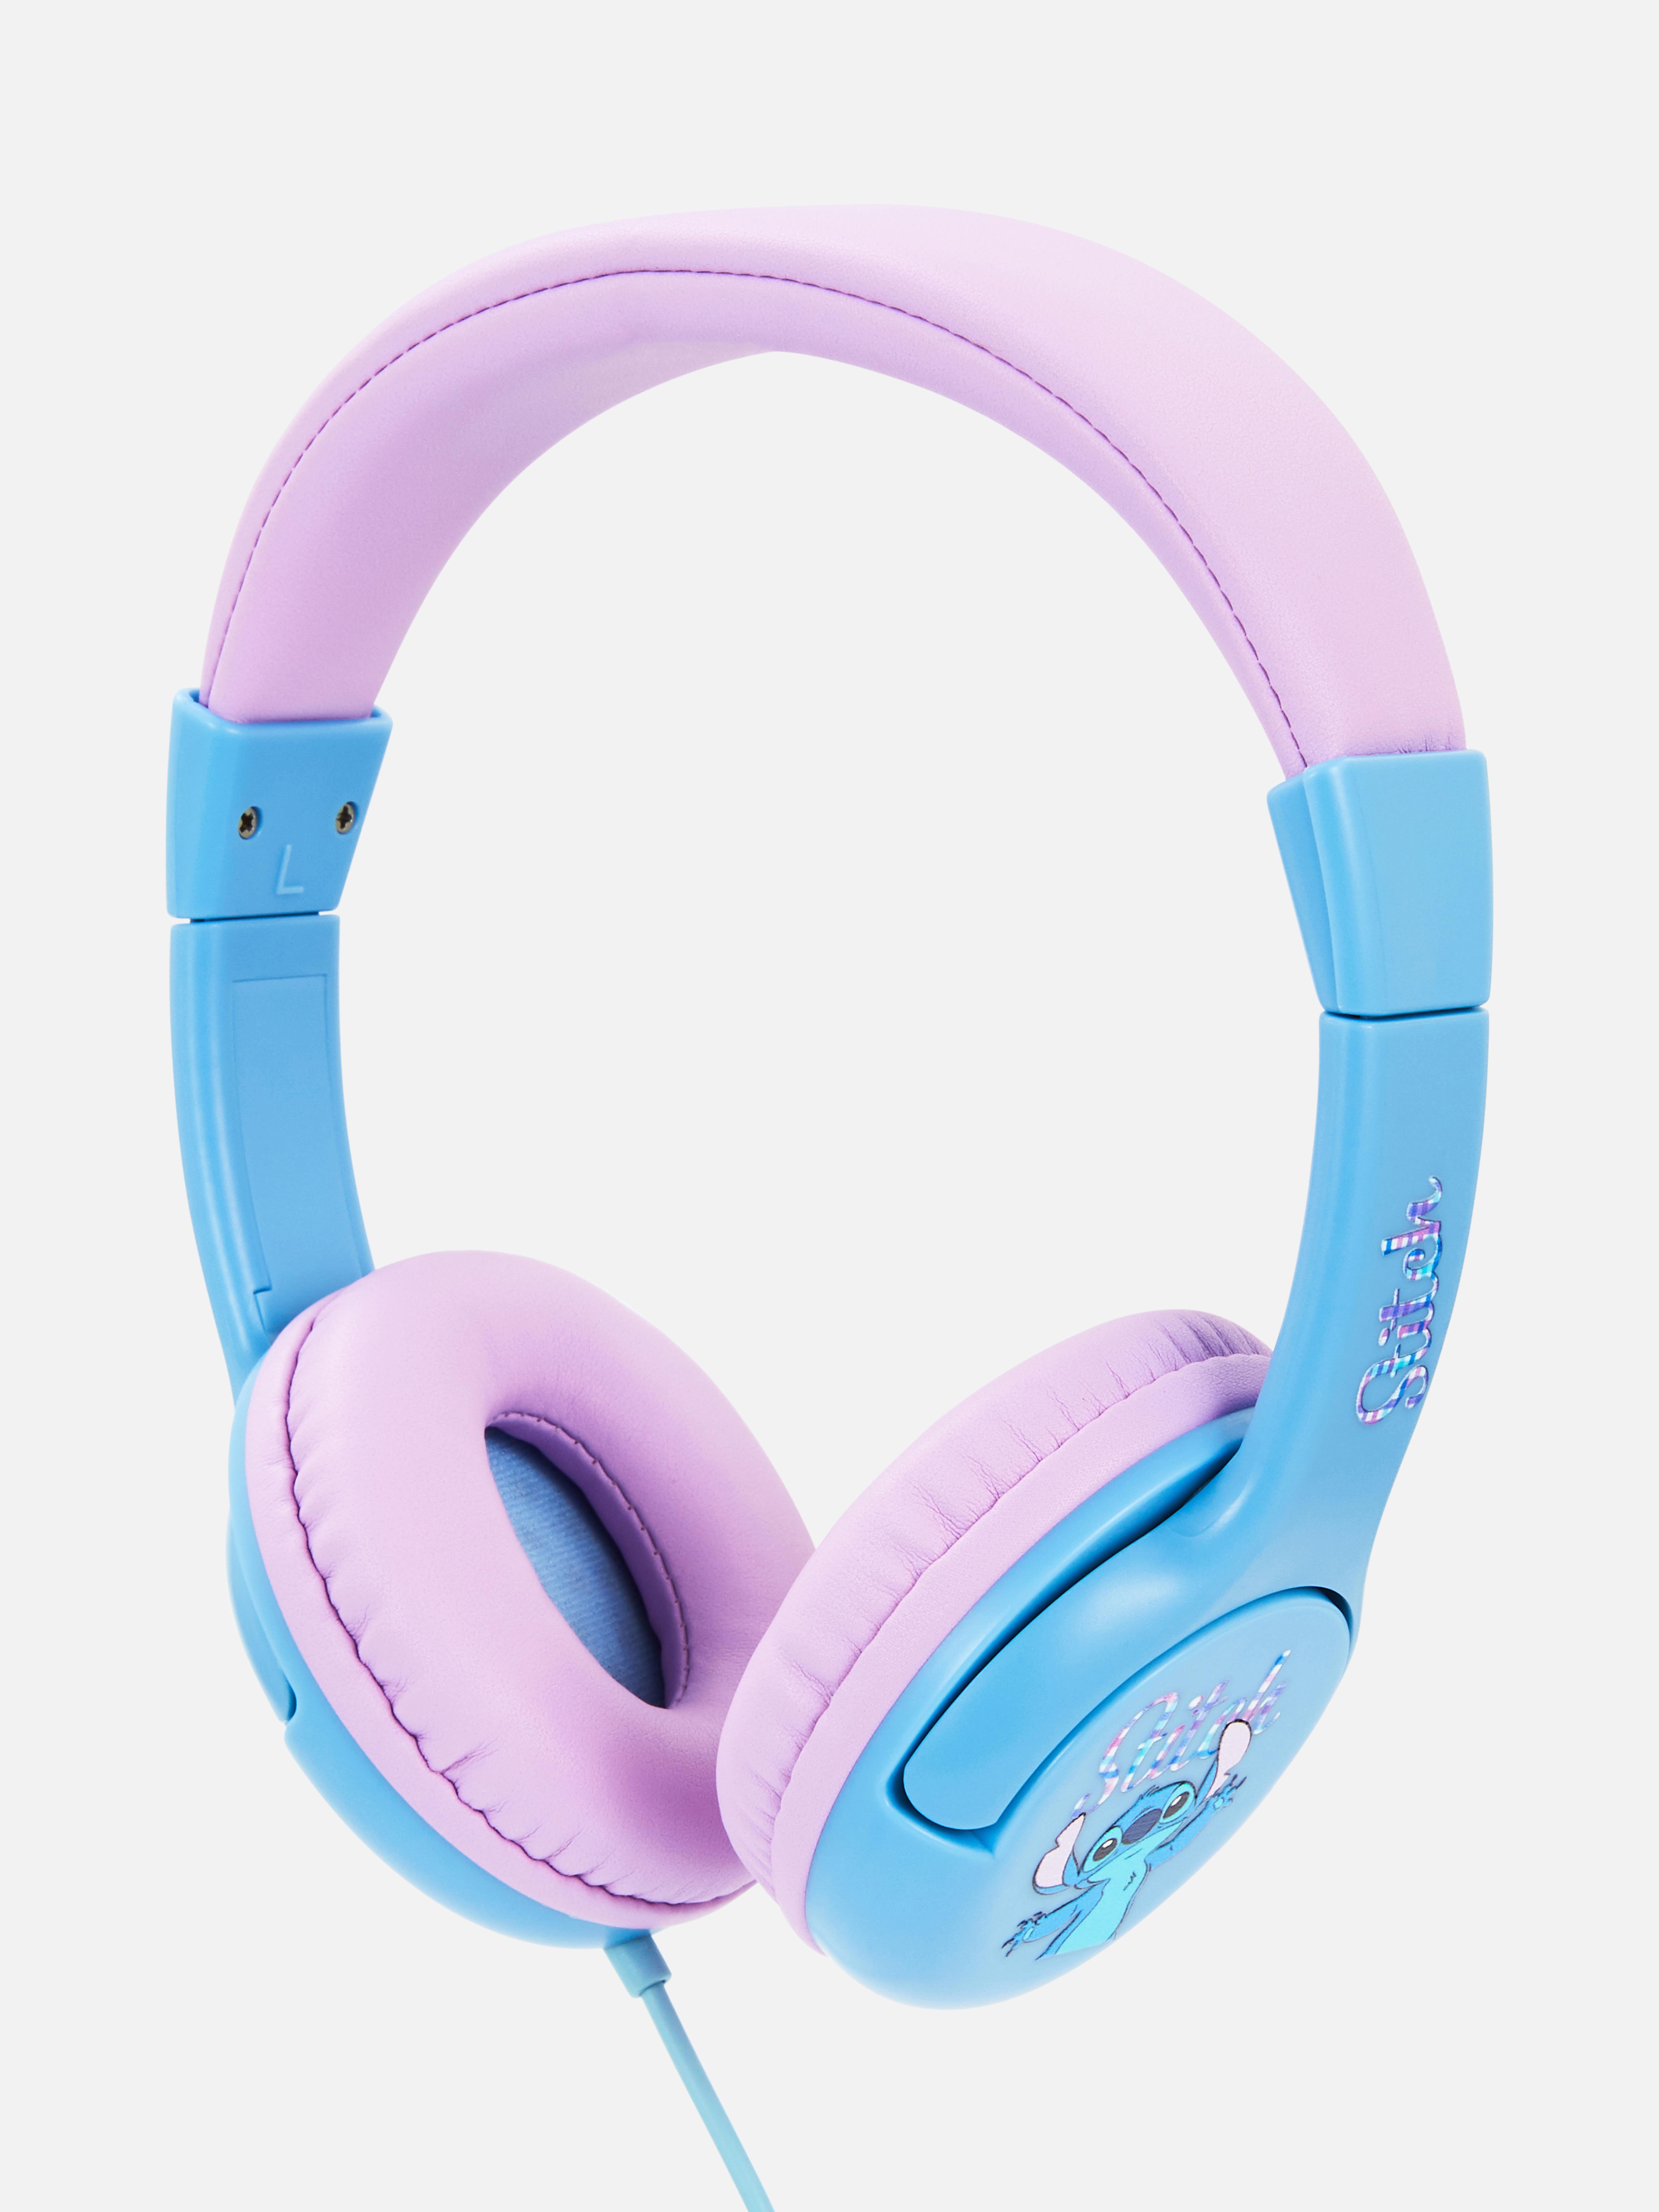 Disney’s Lilo & Stitch Headphones